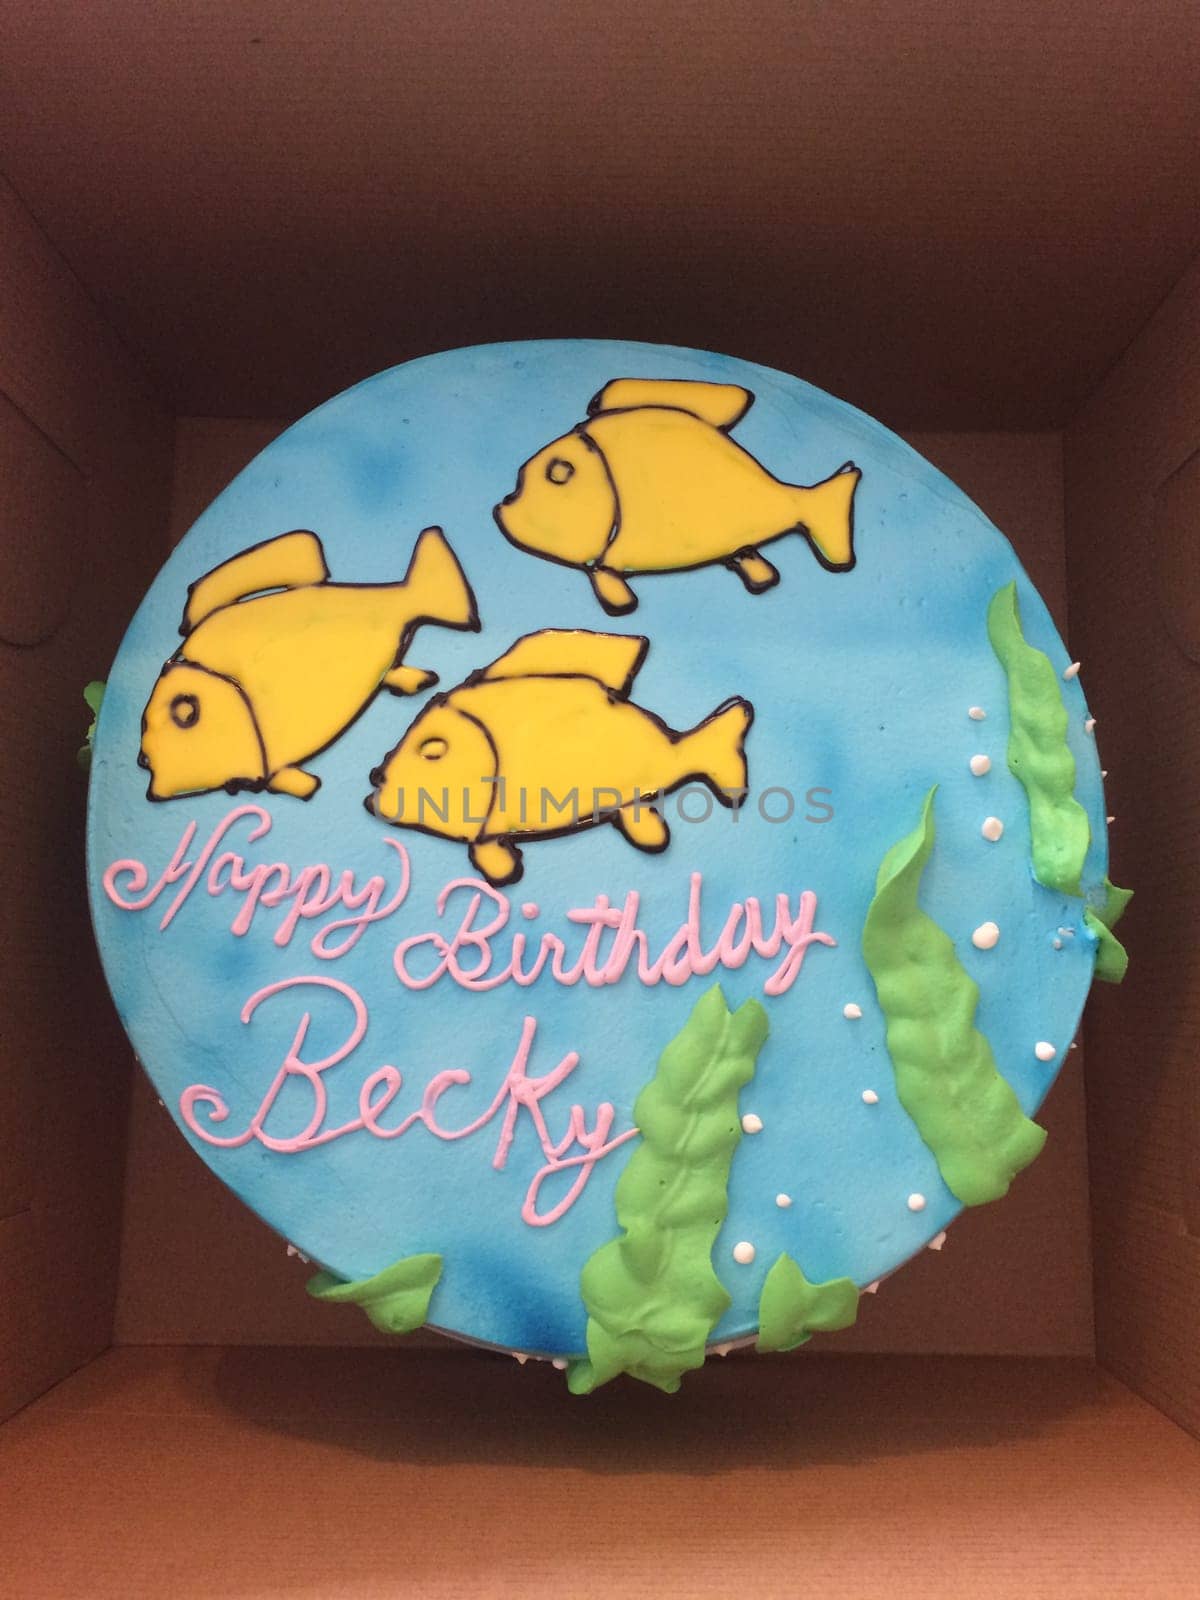 Happy Birthday Becky Cake with Fish Swimming Underwater. High quality photo